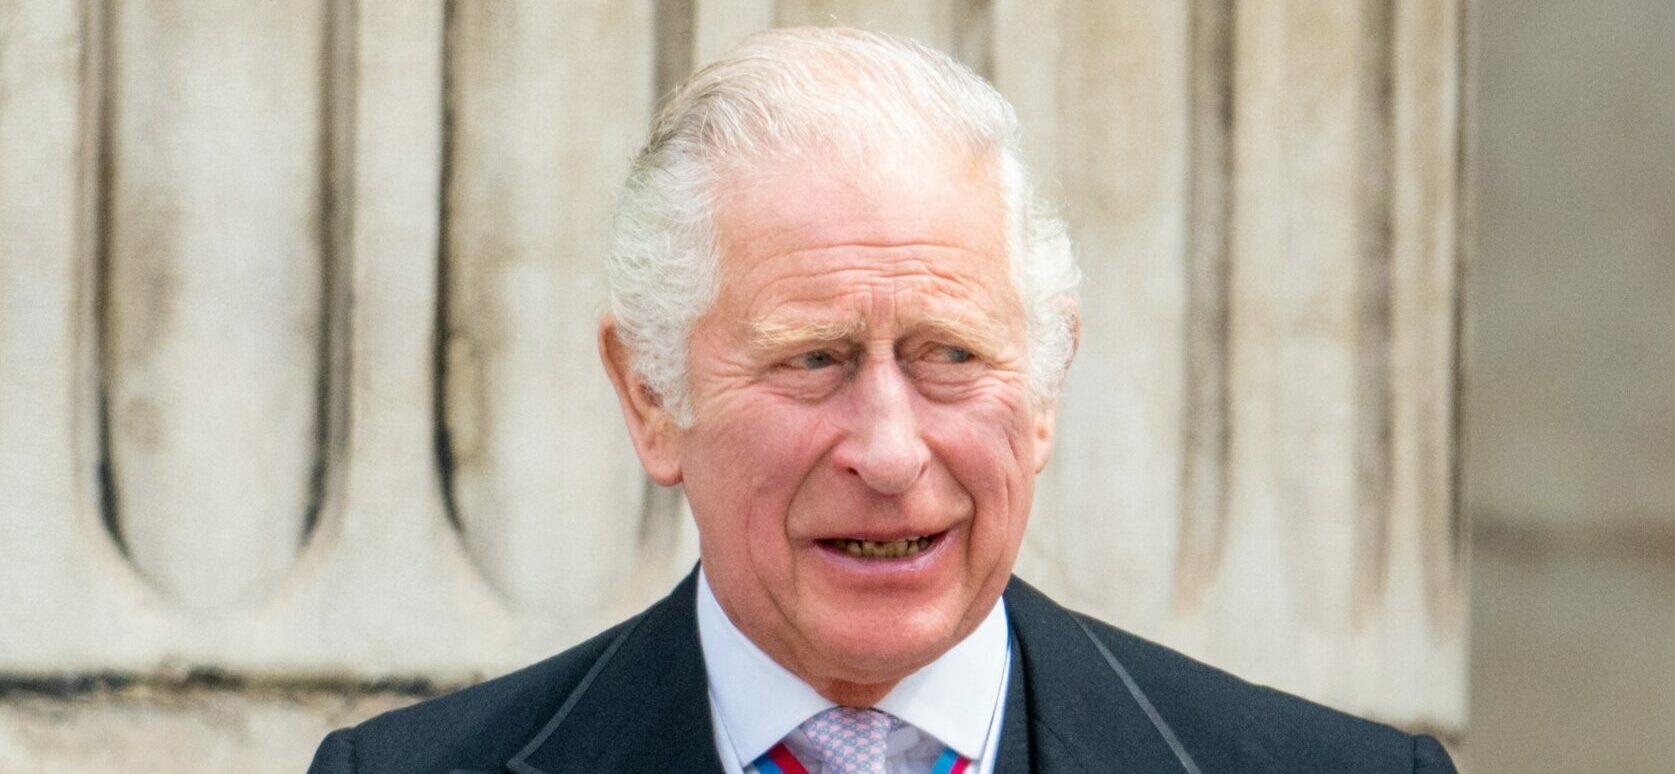 King Charles III celebrates 74th birthday, London, UK - 14 Nov 2022